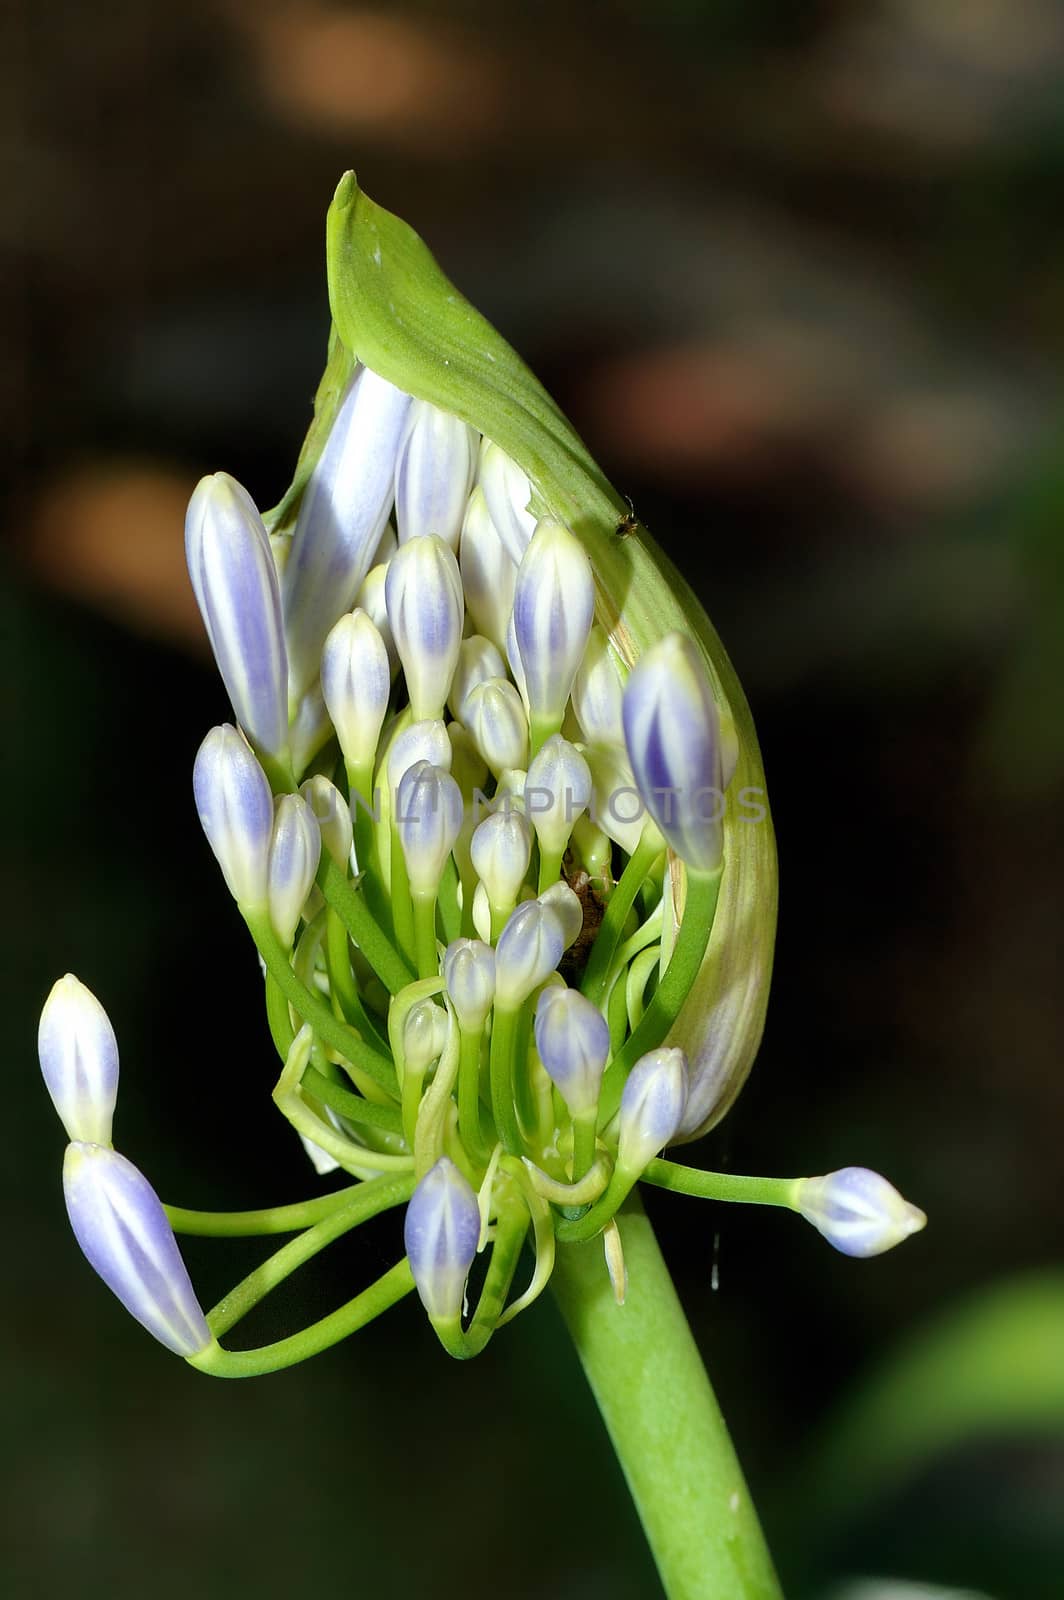 The bud of Agapanthus africanus flower opening